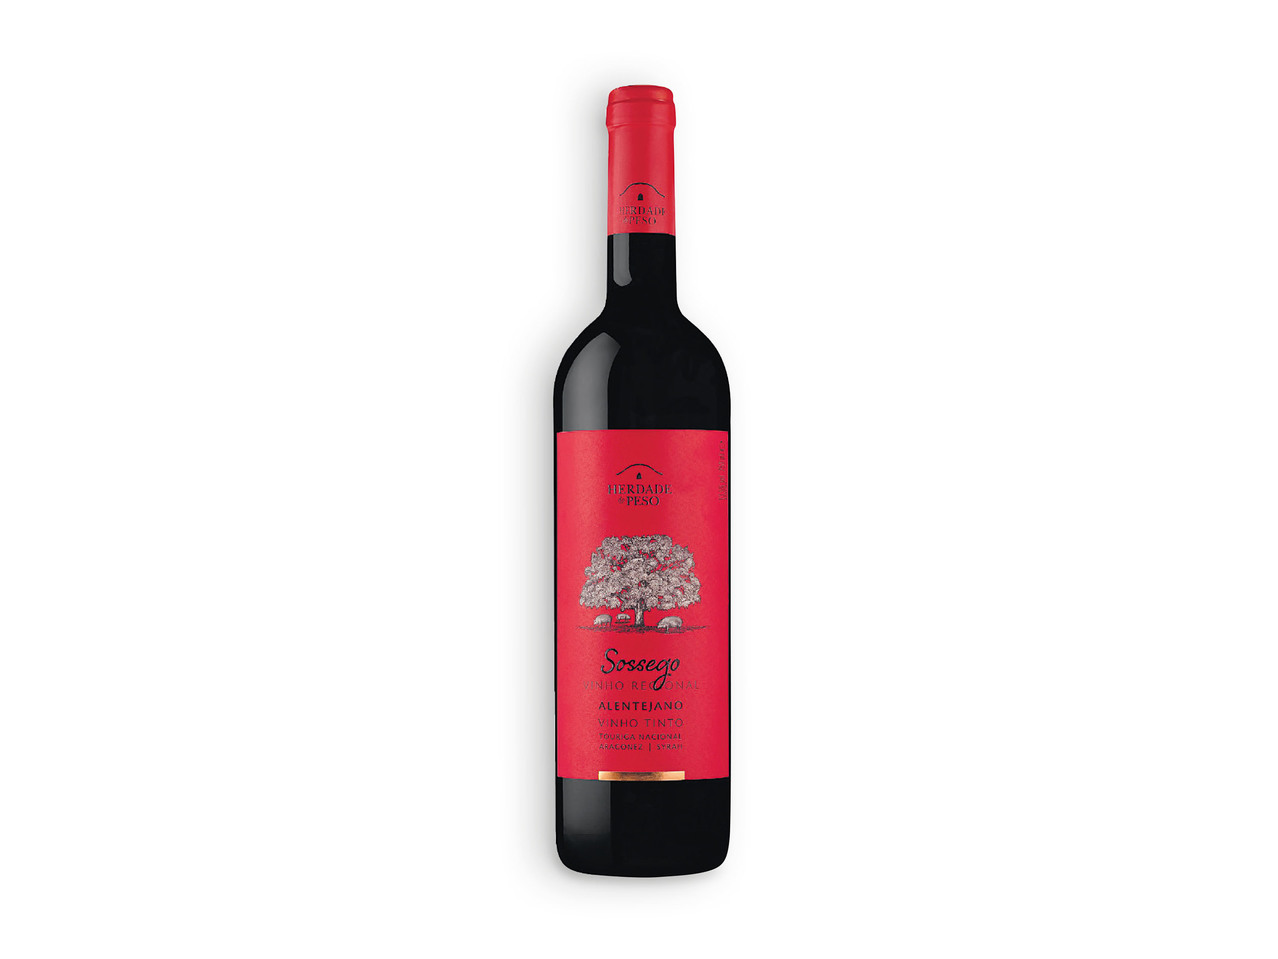 SOSSEGO(R) Vinho Tinto Regional Alentejano